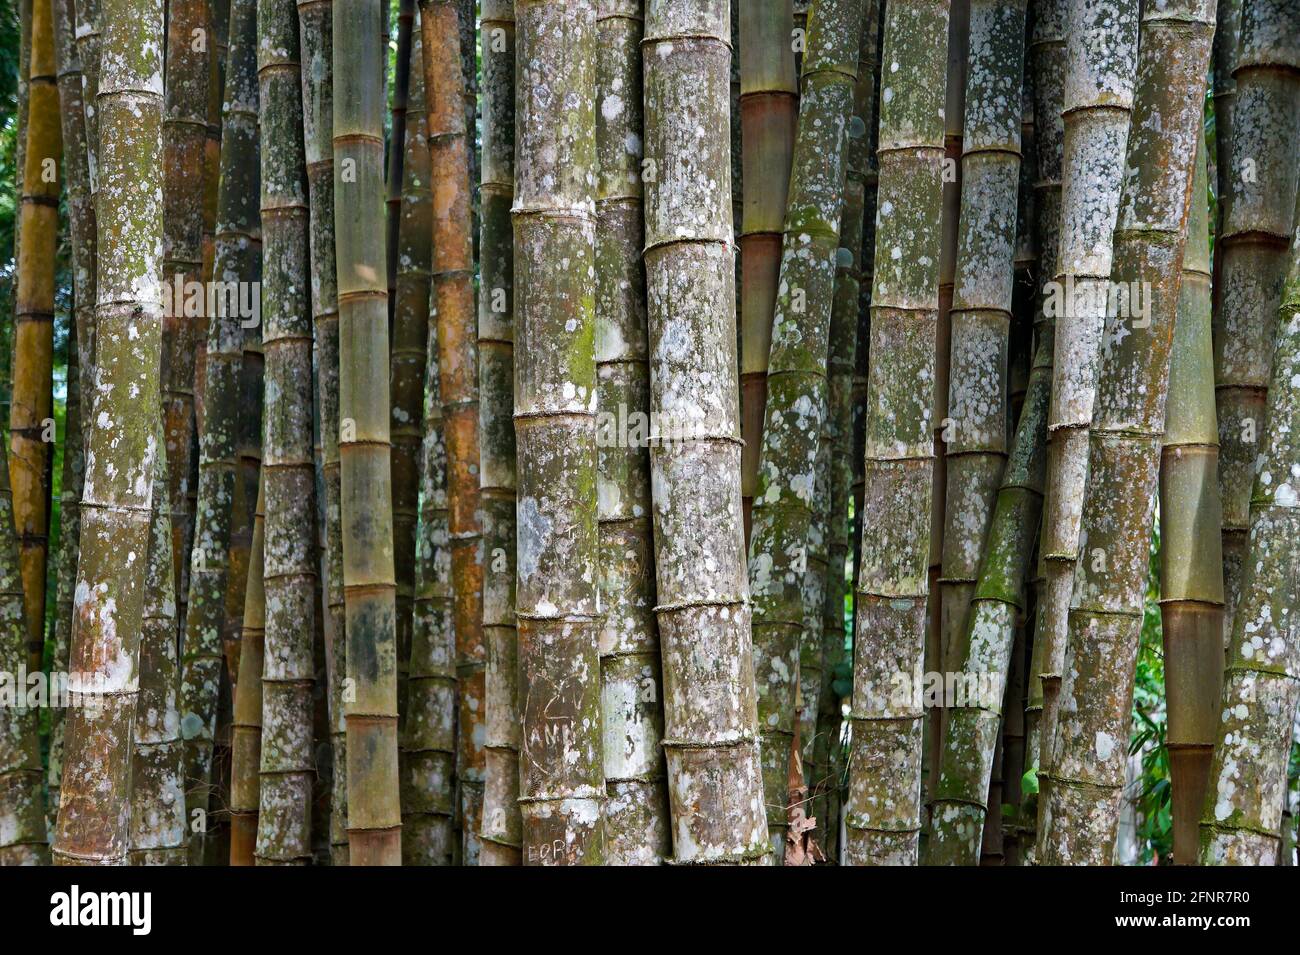 Giant bamboo or dragon bamboo (Dendrocalamus giganteus) Stock Photo